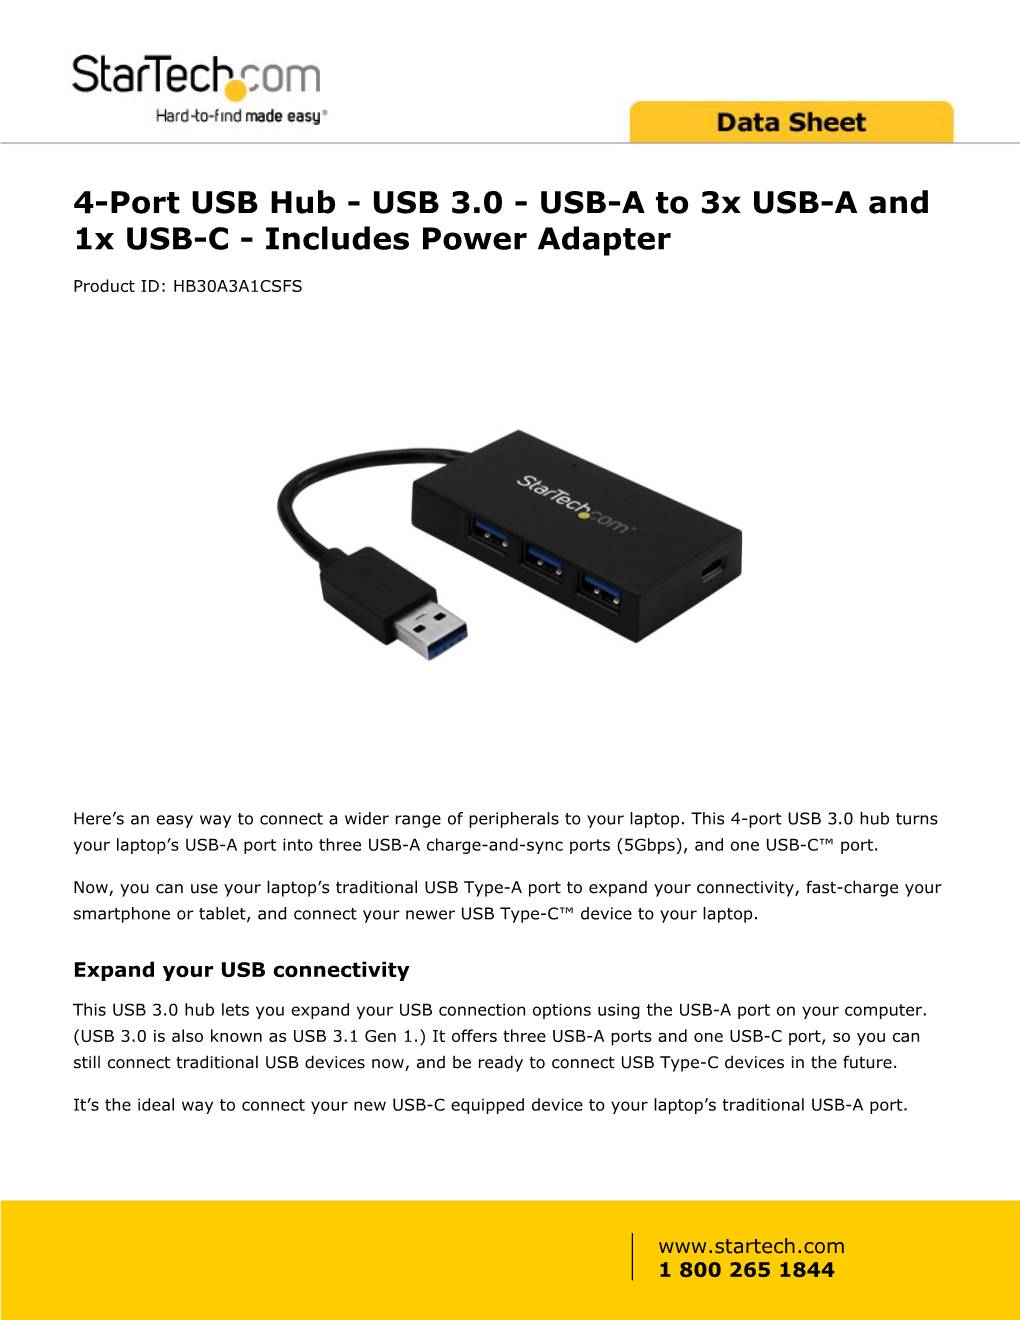 4-Port USB Hub - USB 3.0 - USB-A to 3X USB-A and 1X USB-C - Includes Power Adapter